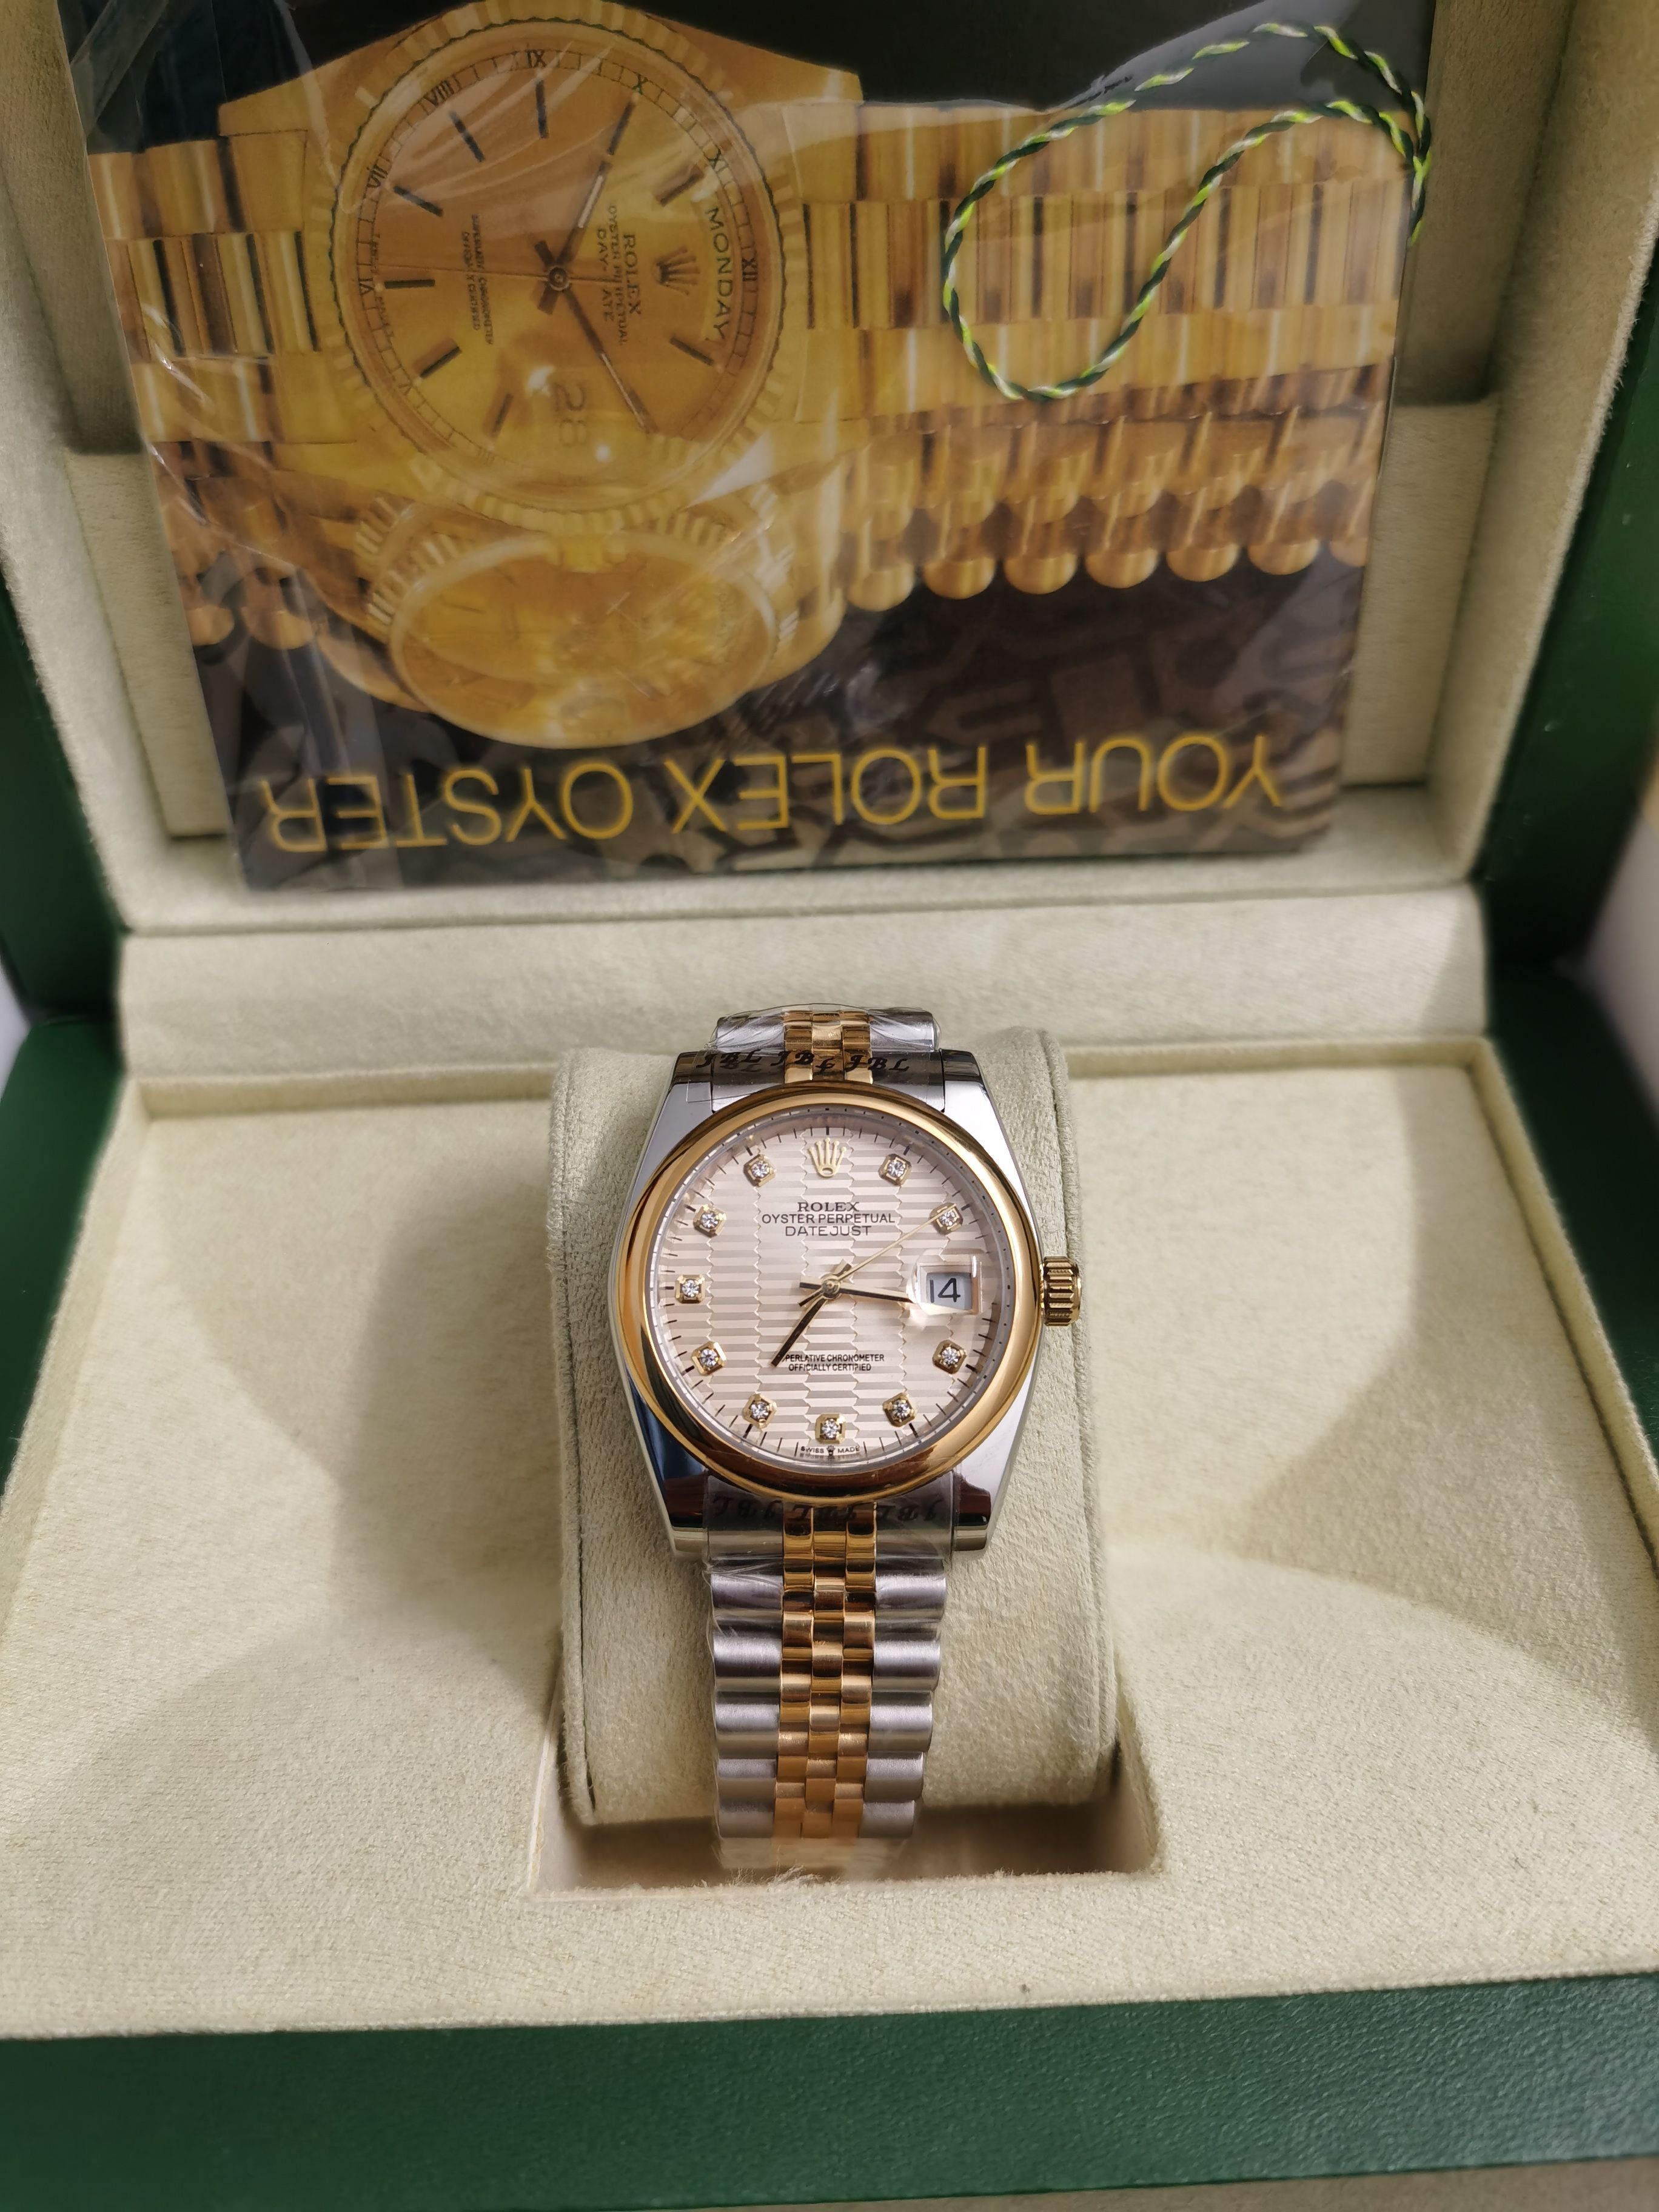 36MM original box+watch